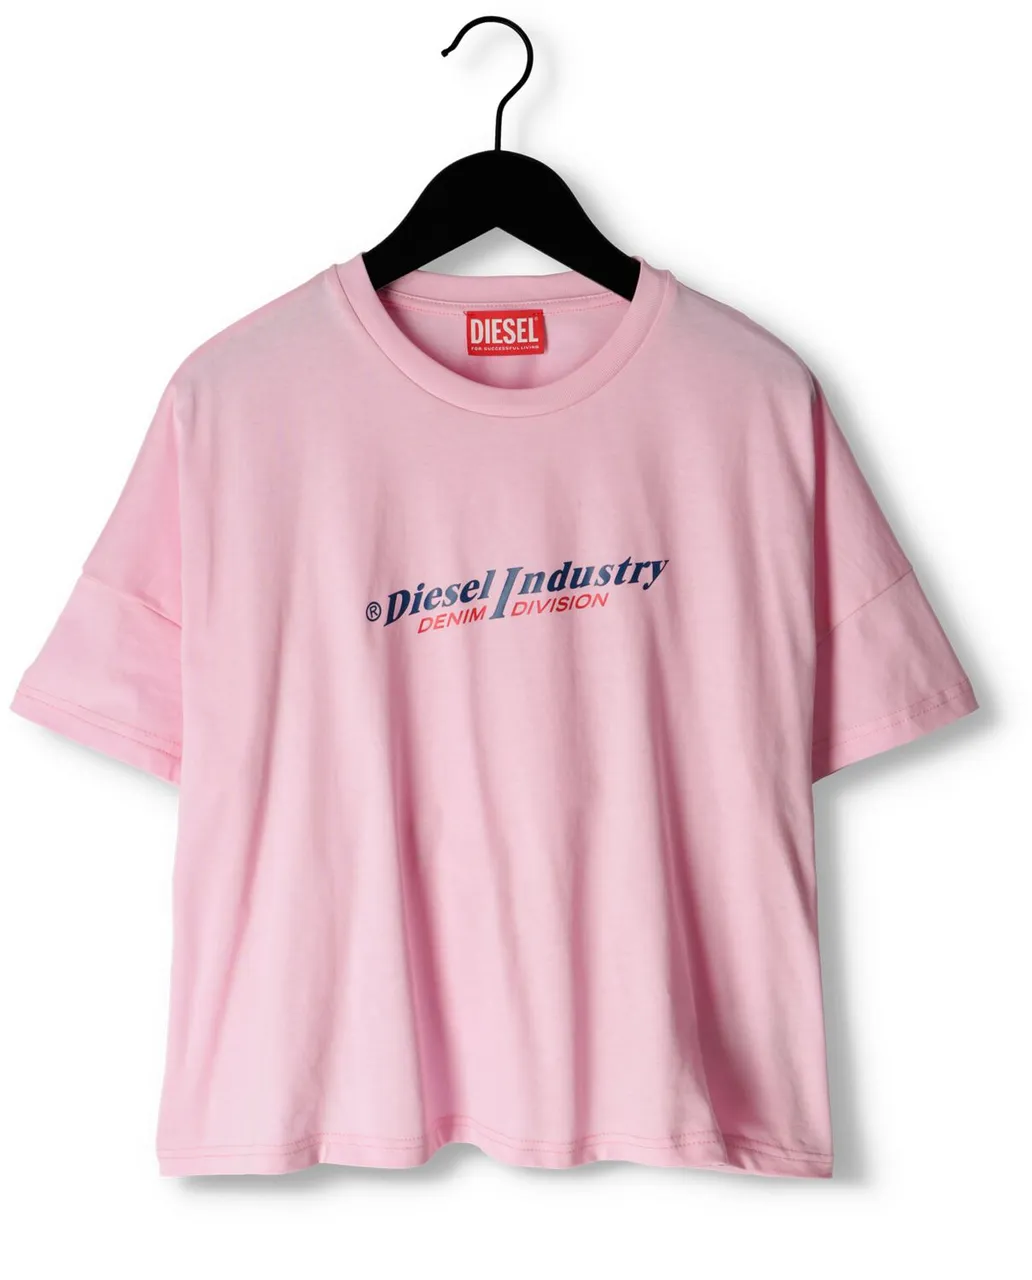 Diesel Mädchen Tops & T-shirts Texvalind - Rosa